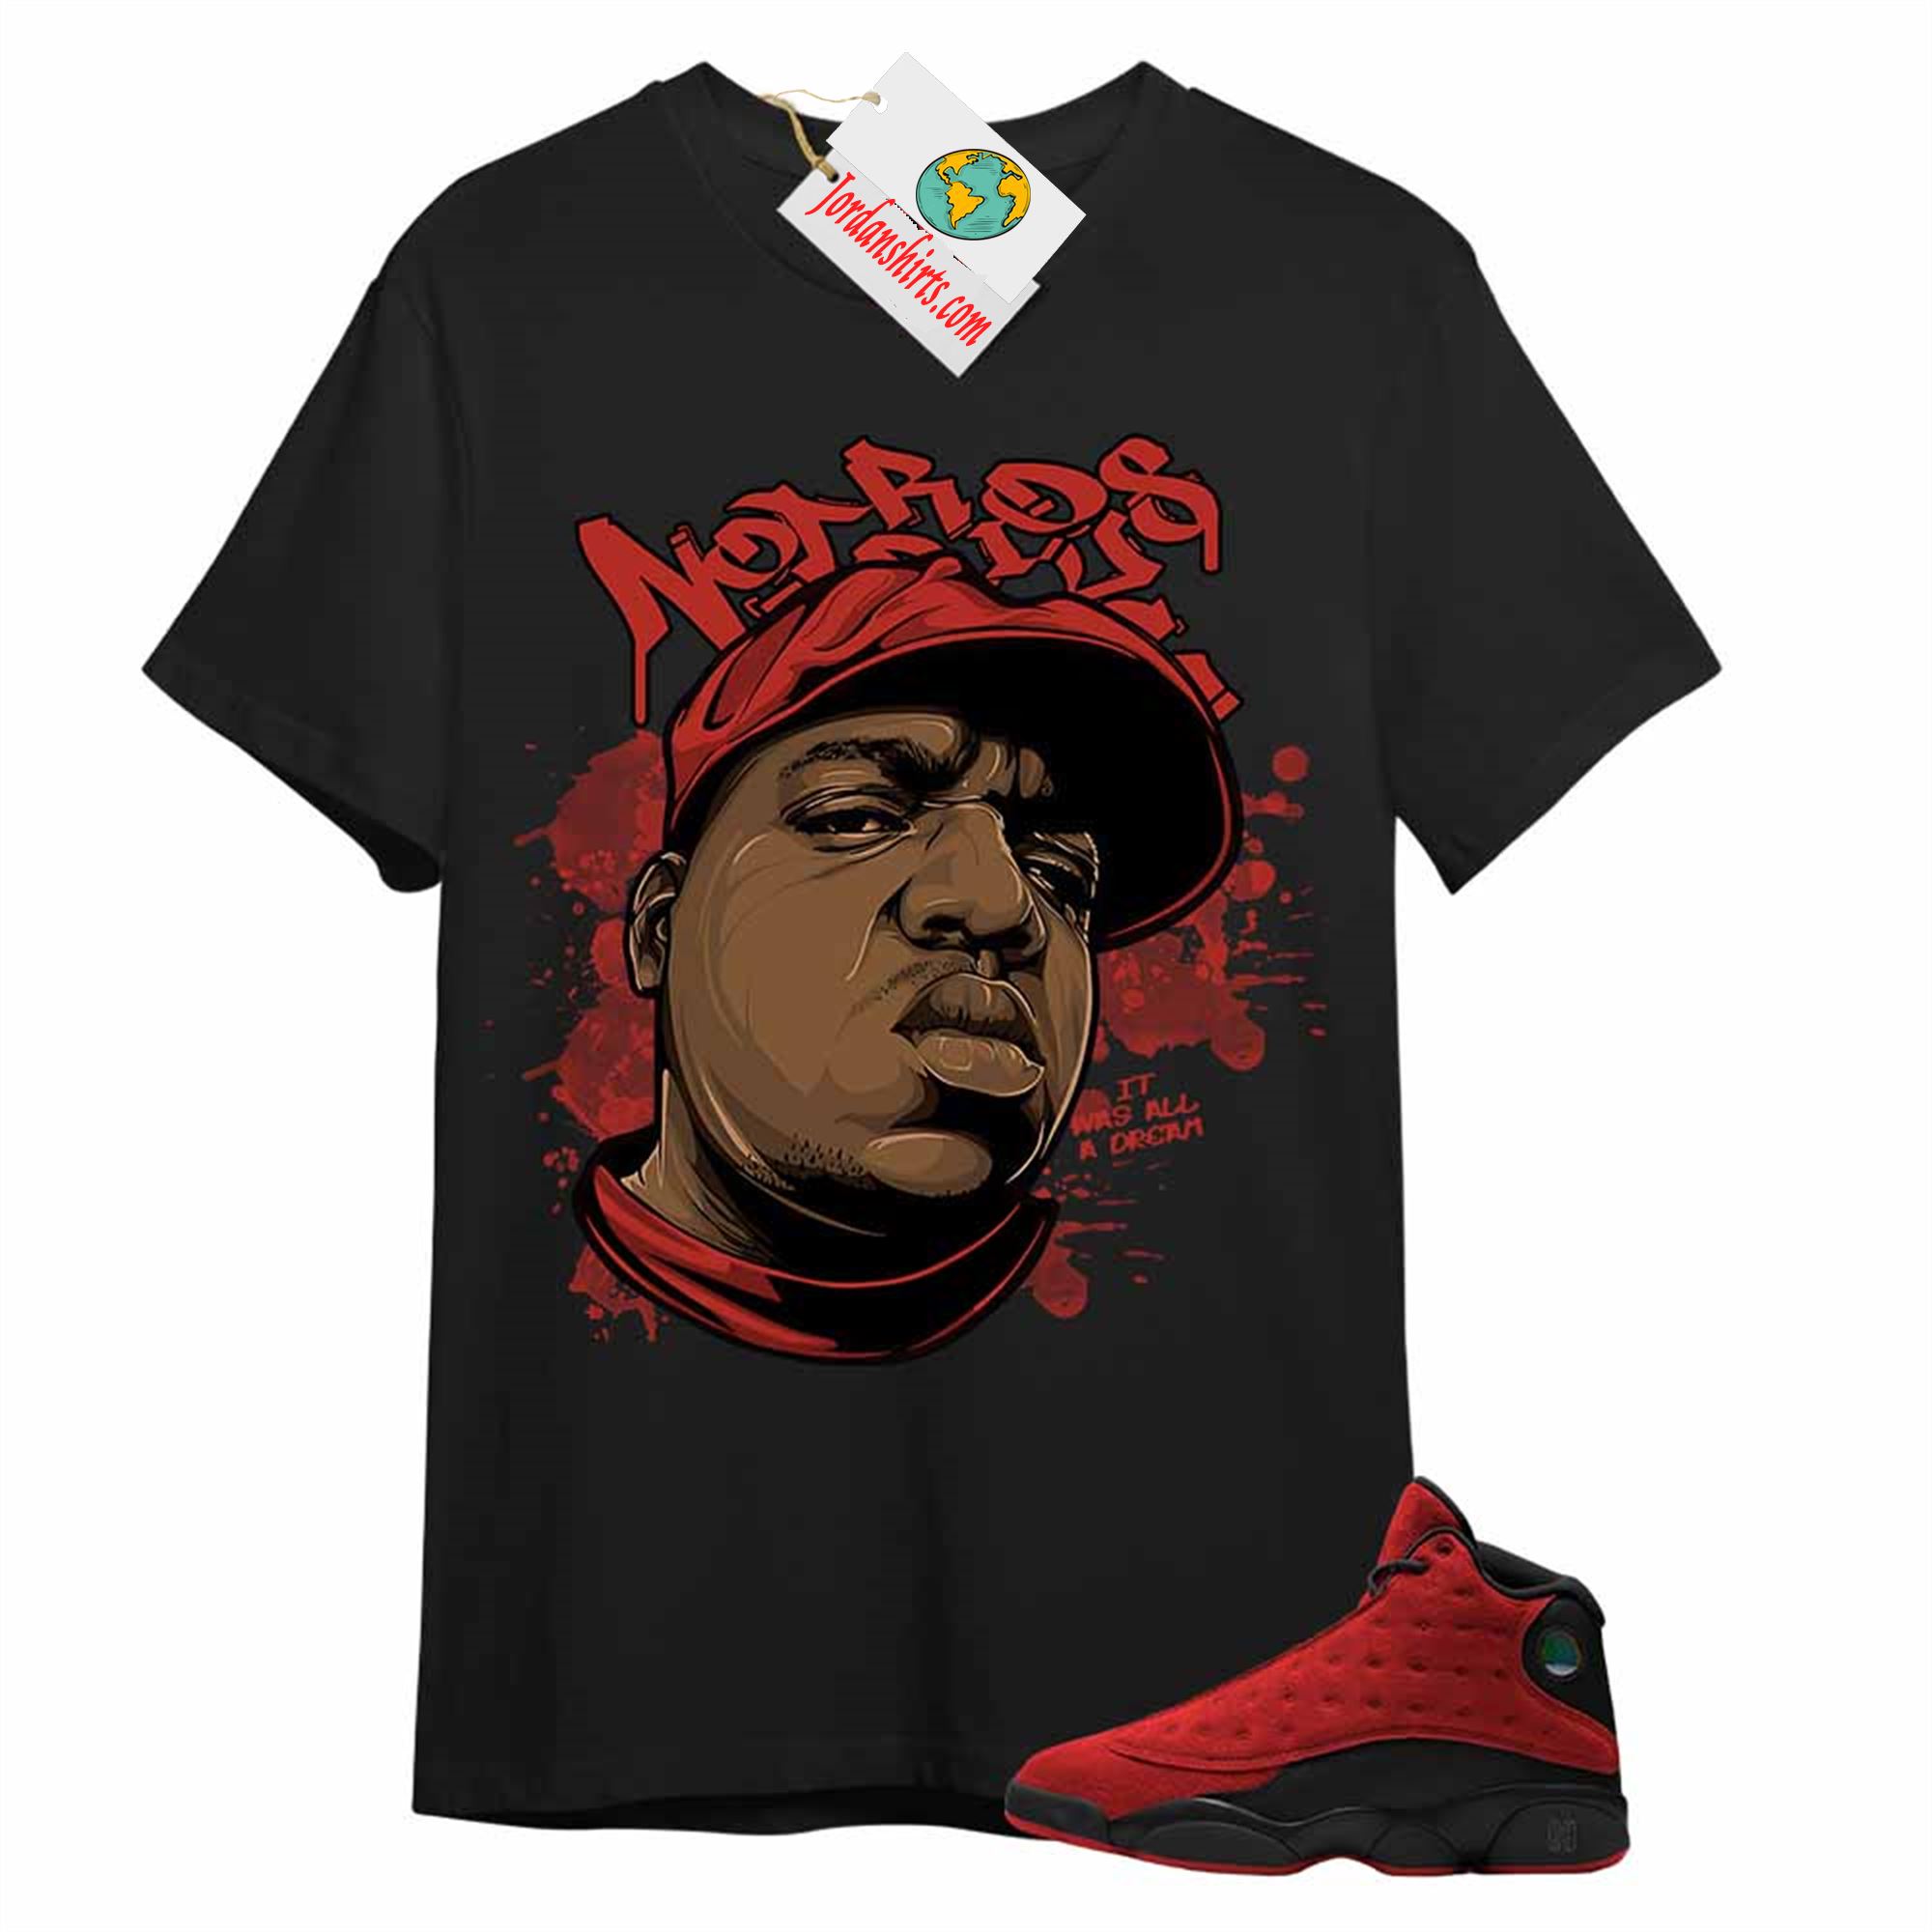 Jordan 13 Shirt, Notorious Big Black T-shirt Air Jordan 13 Reverse Bred 13s Full Size Up To 5xl